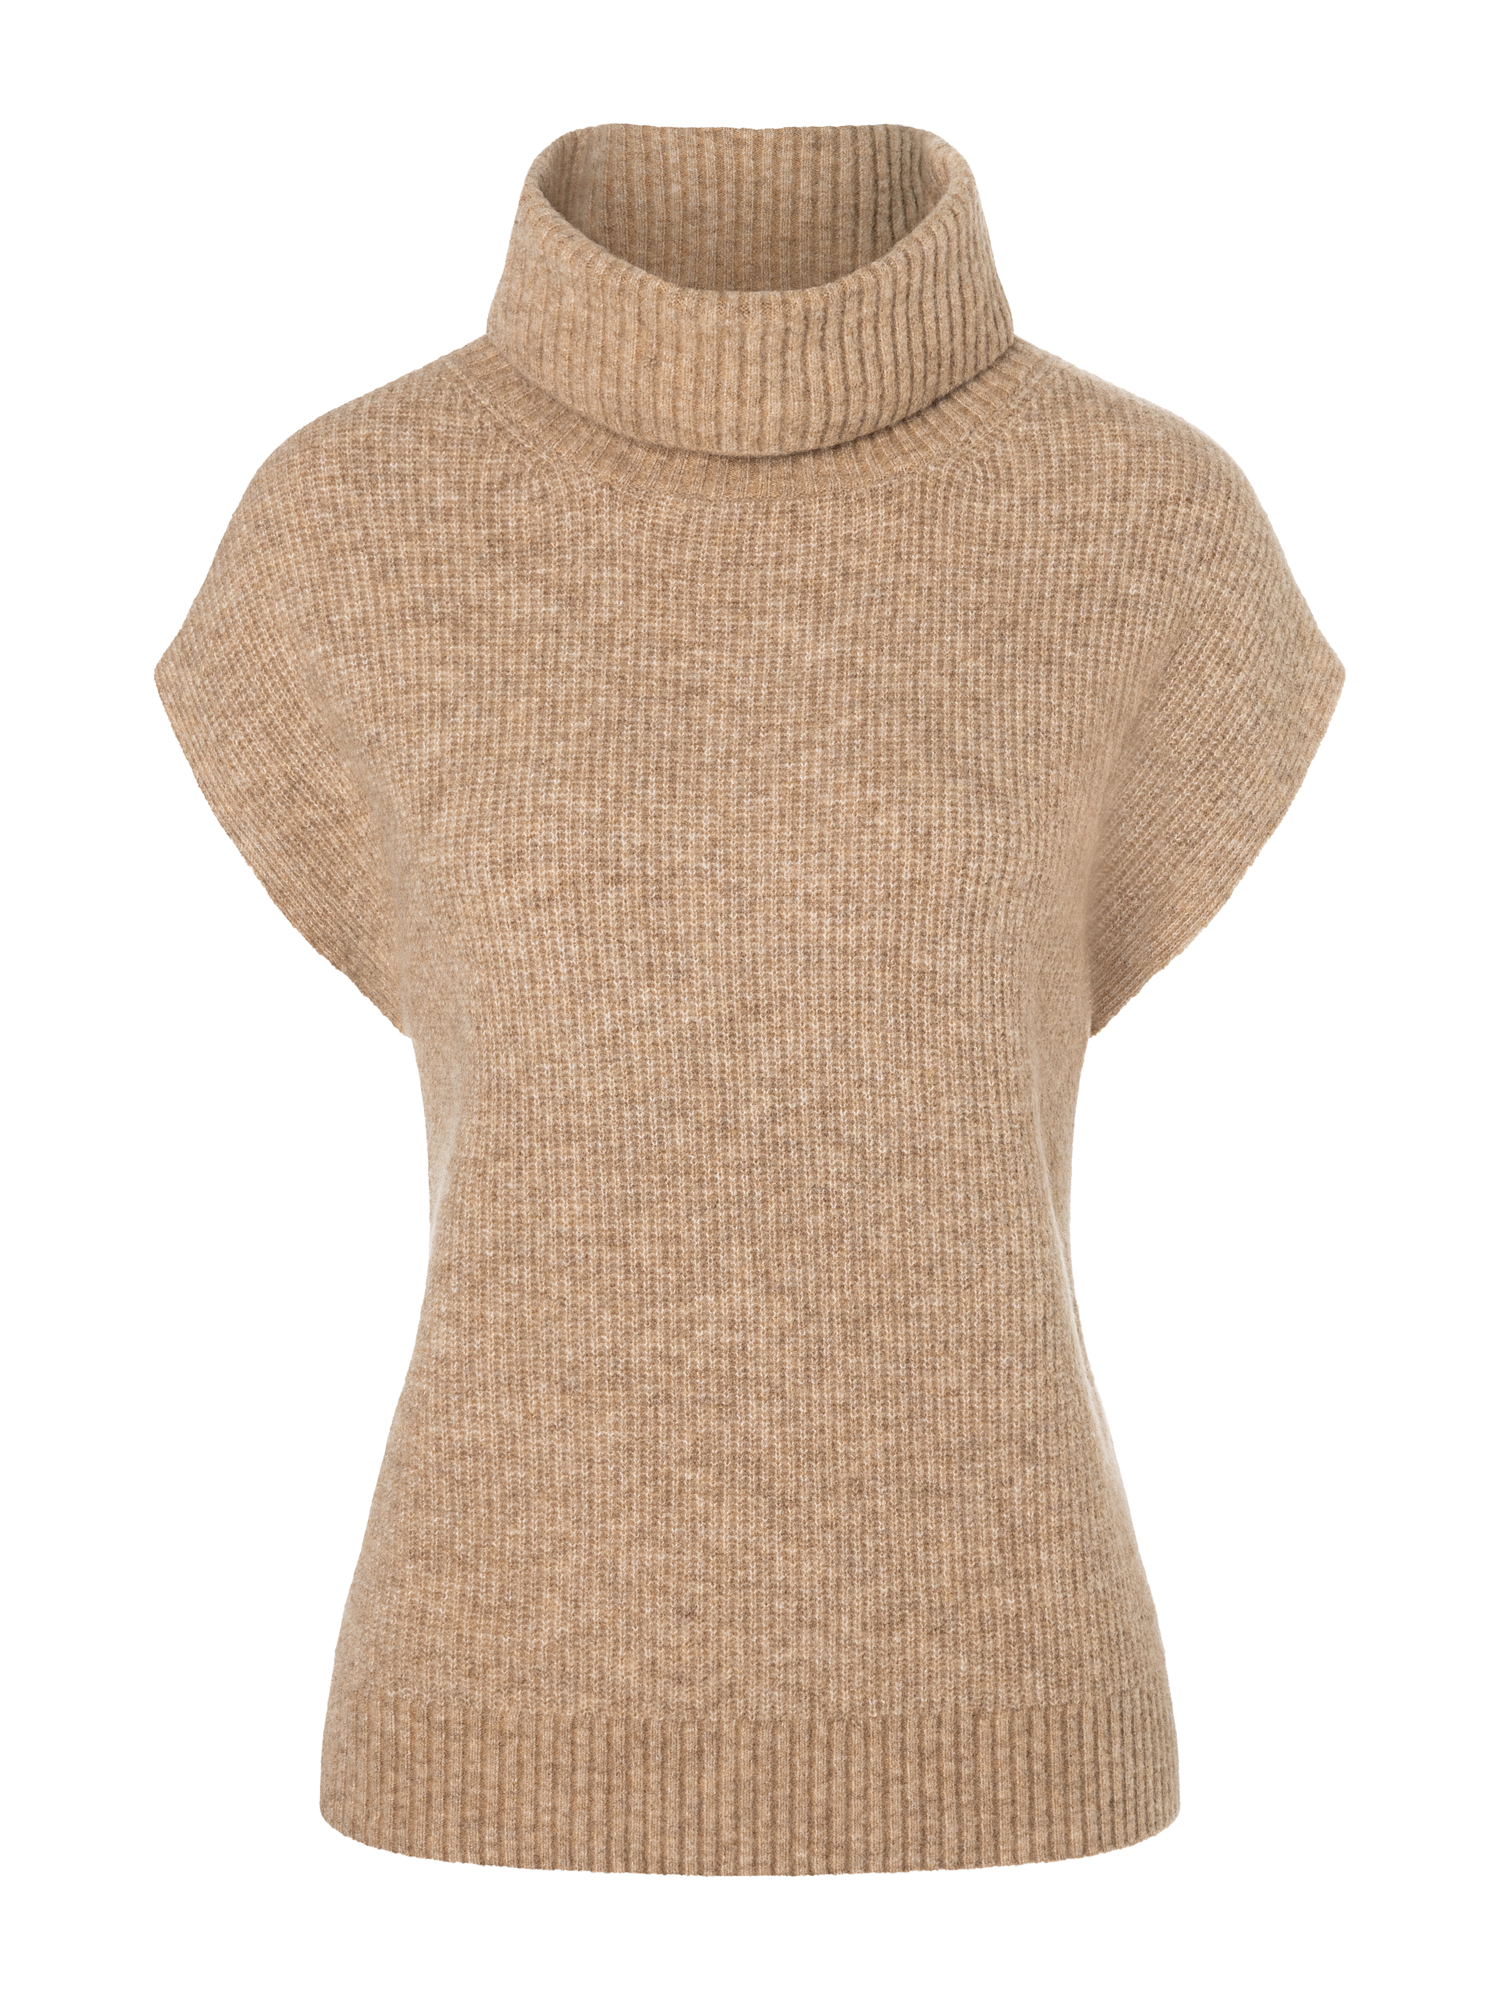 re.draft Knit Turtleneck Sweaters